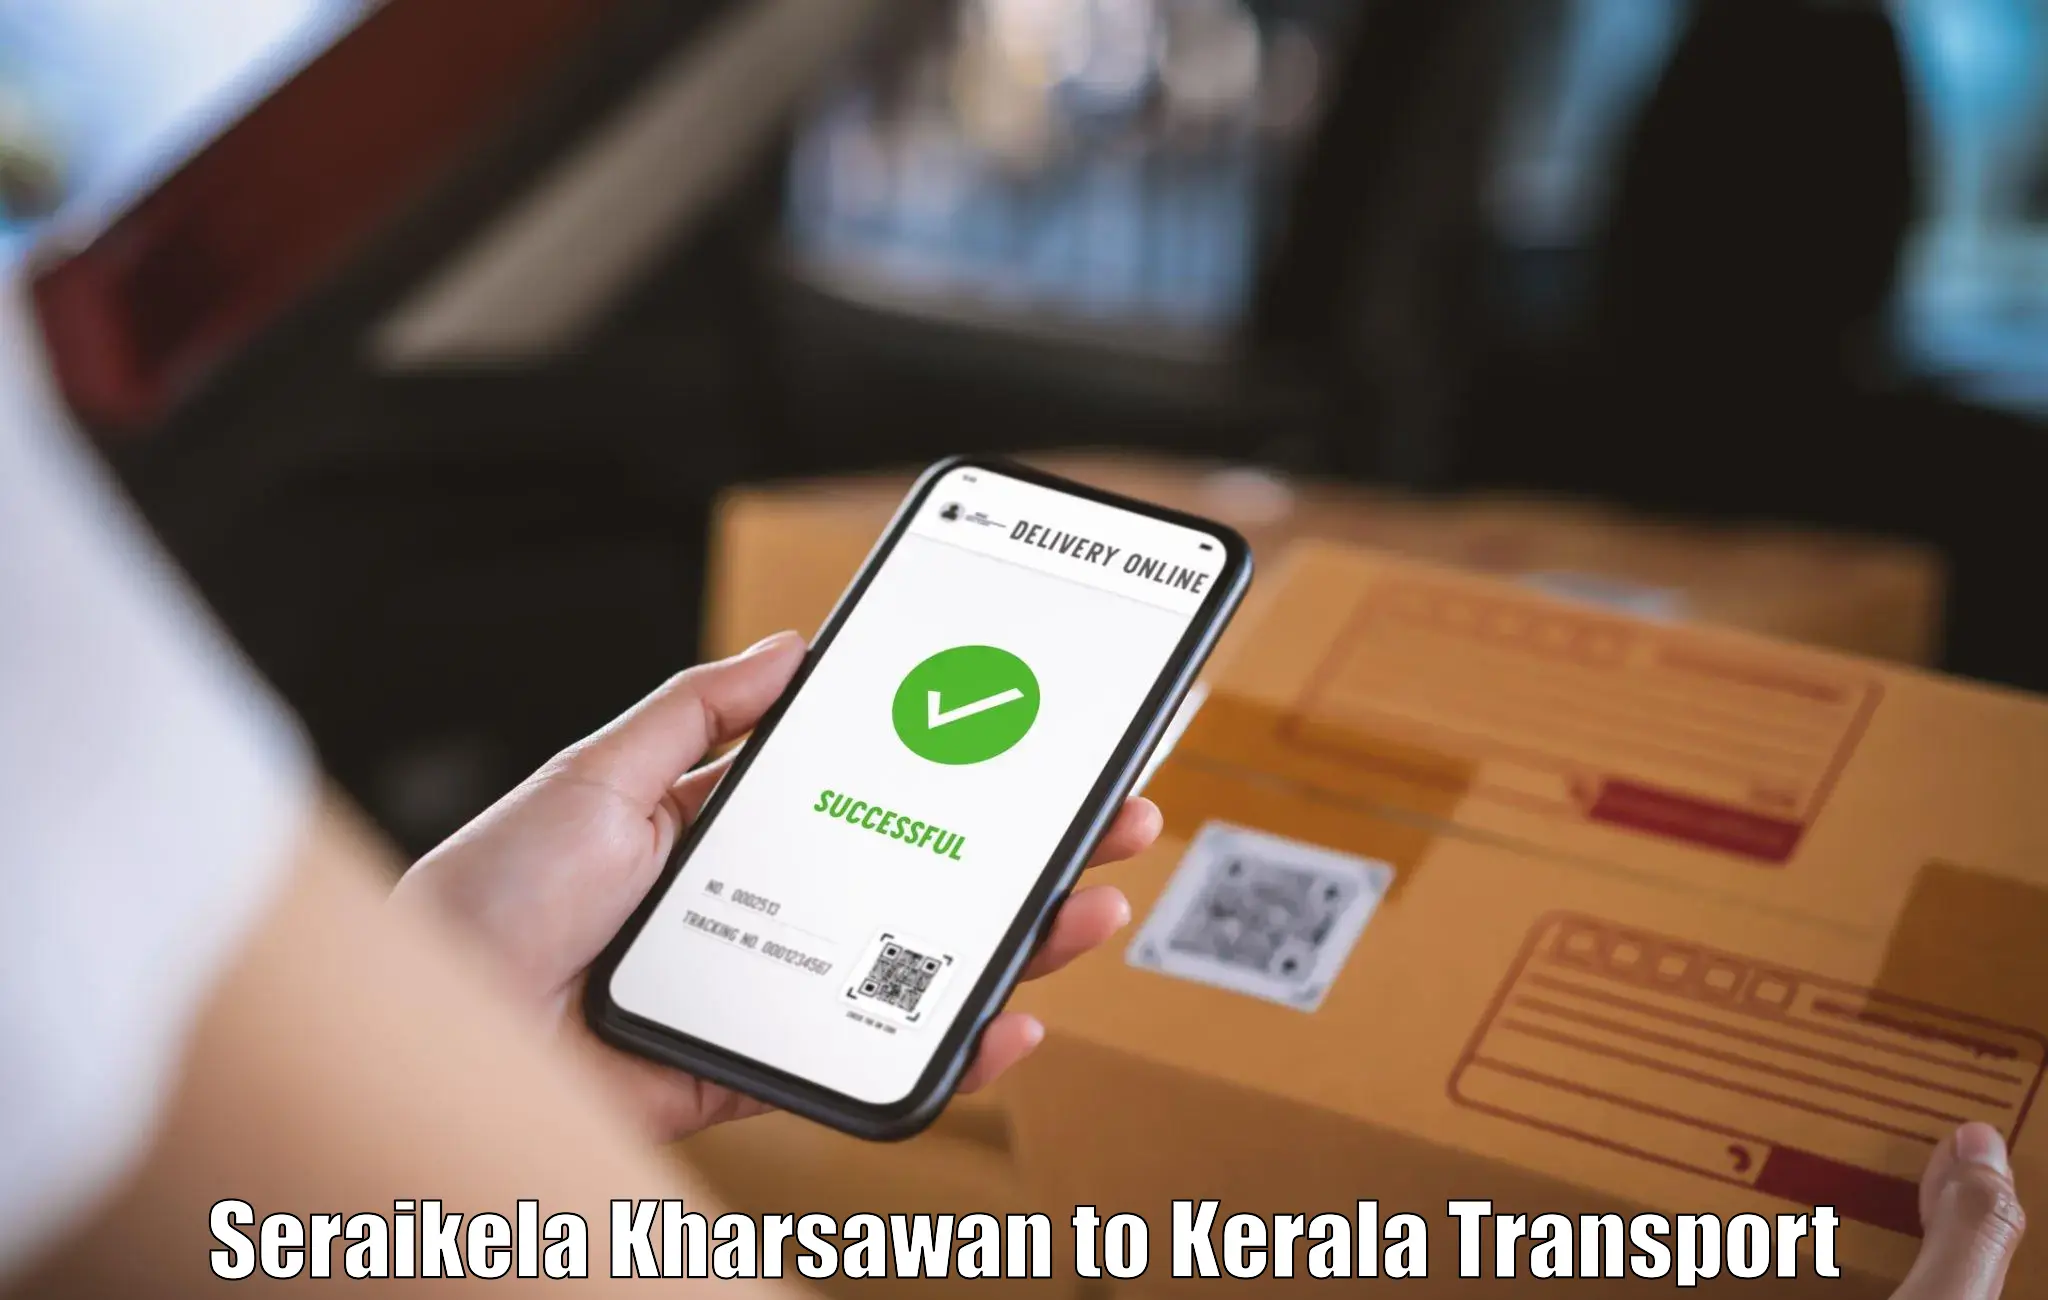 Pick up transport service Seraikela Kharsawan to Kothanalloor